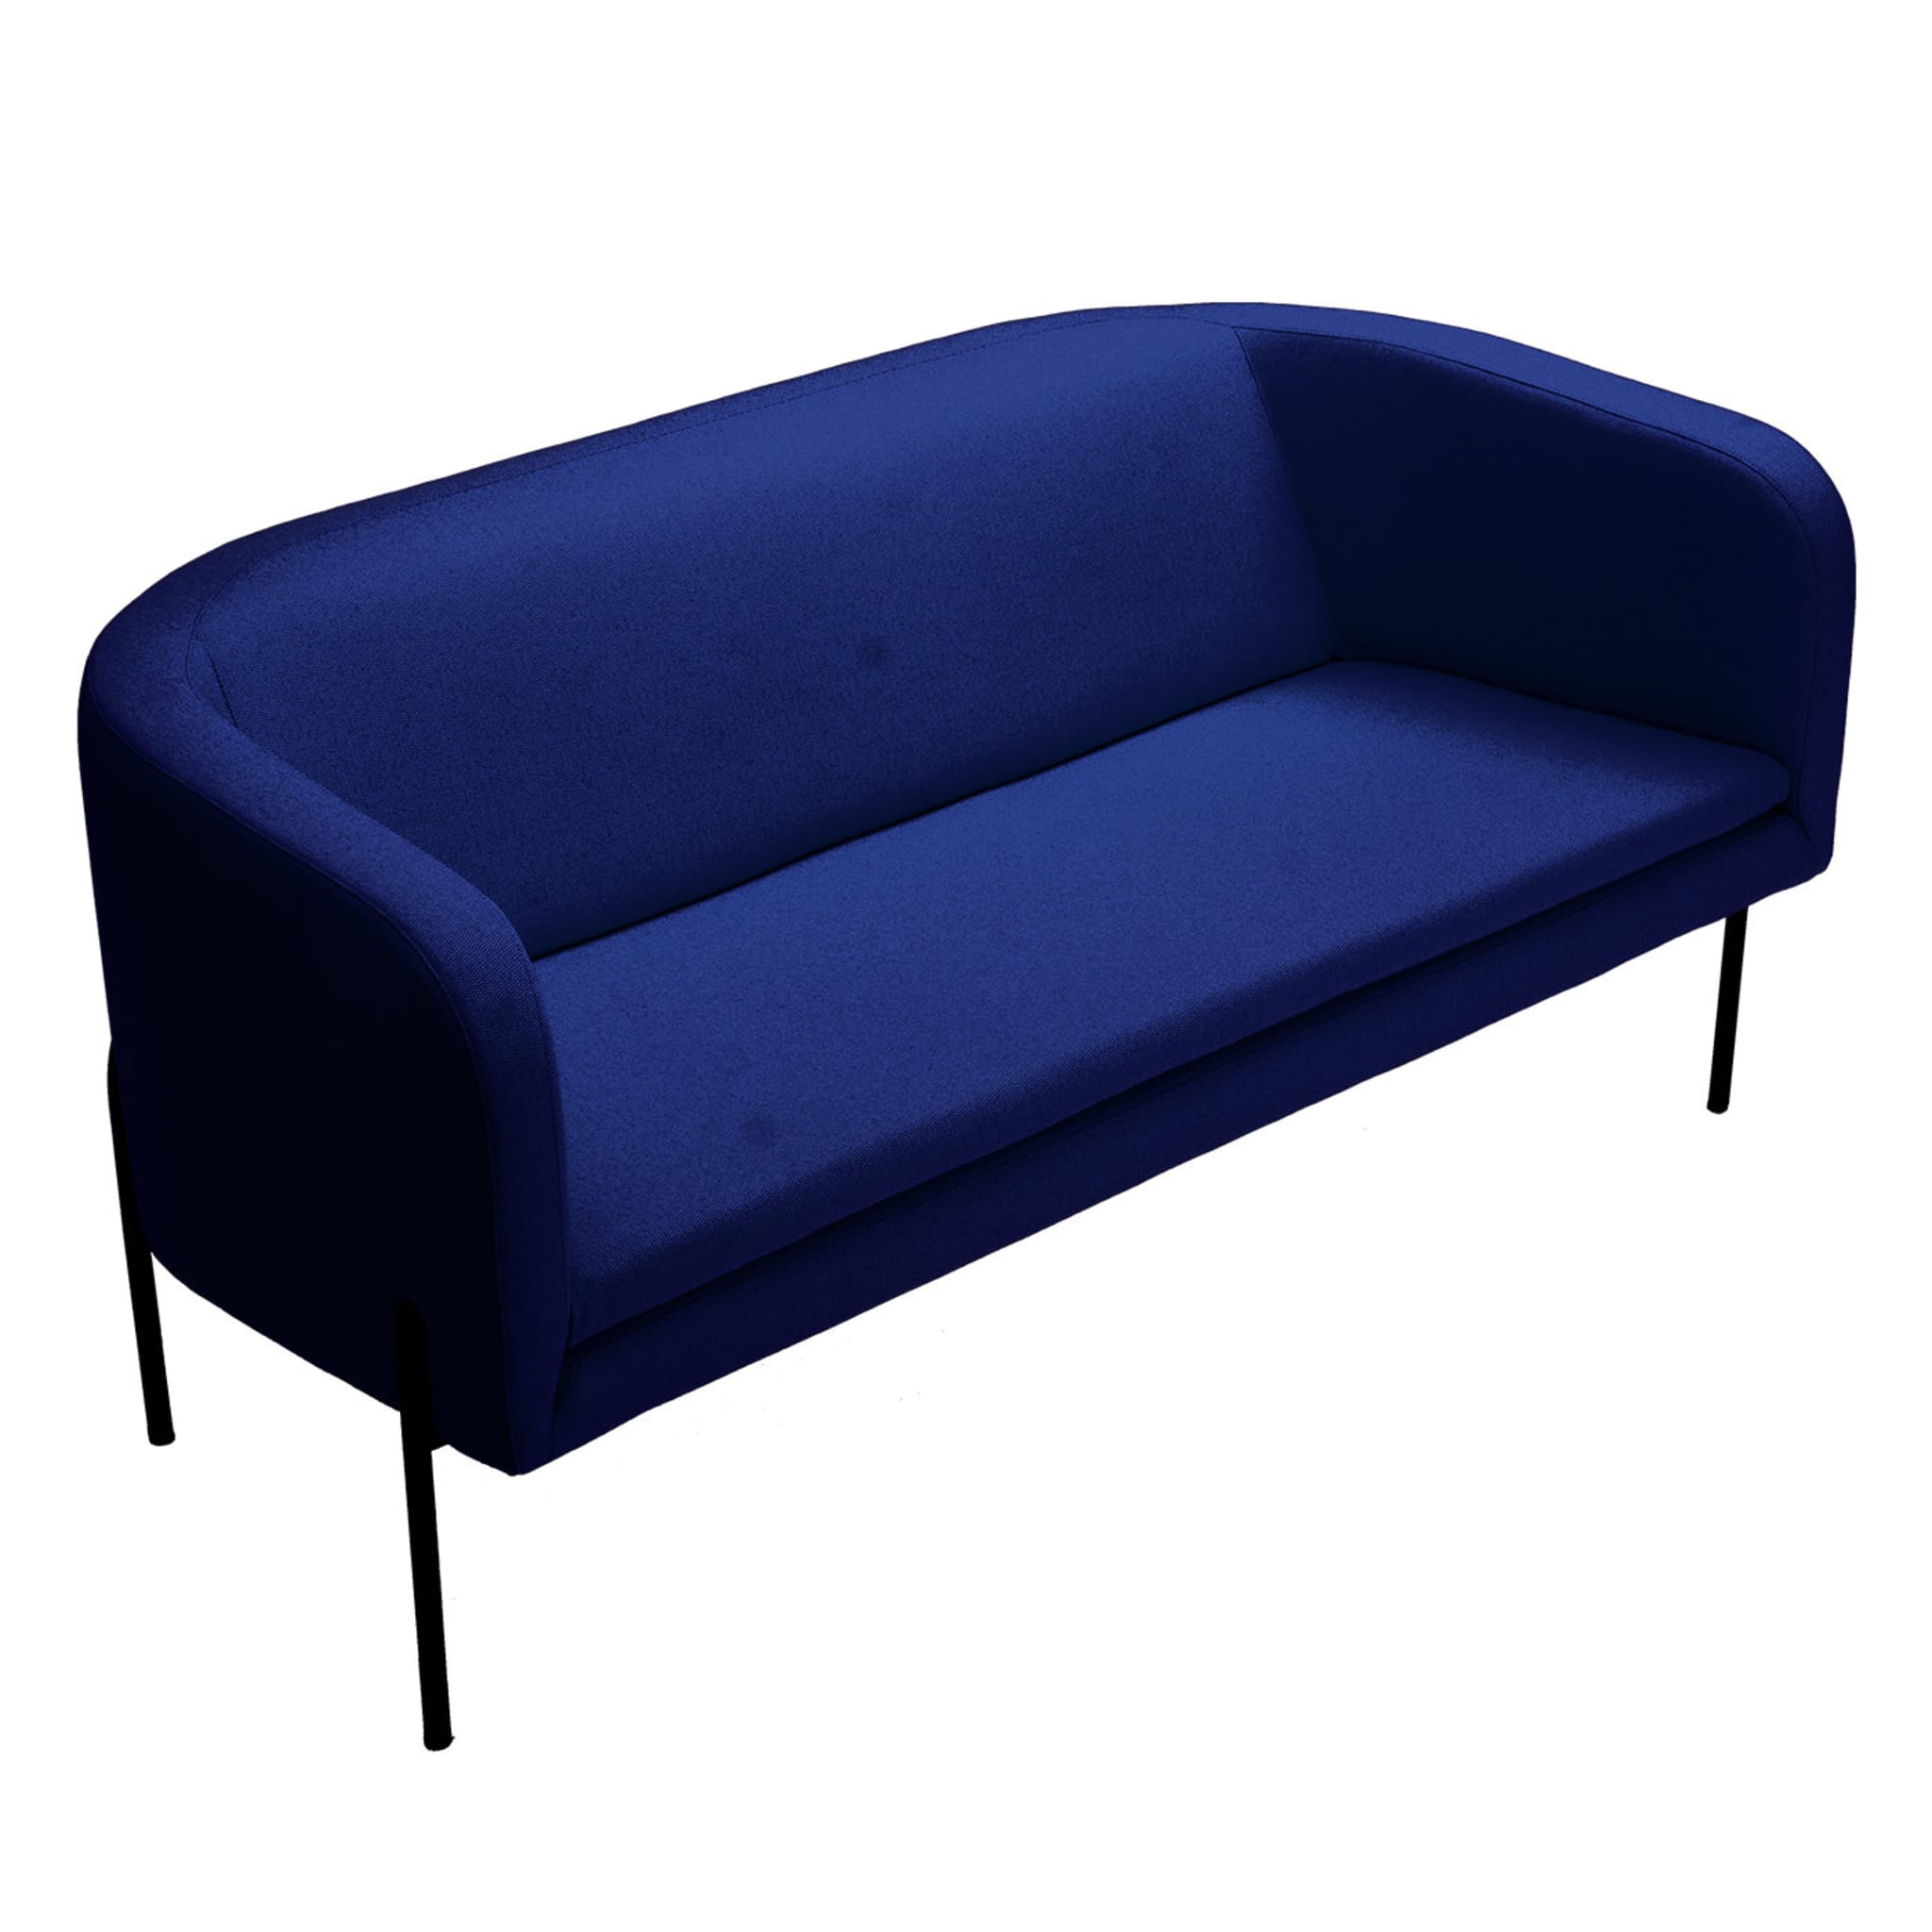 Laetitia Blue 2-Seater Sofa by Fabio Fantolino - Alternative view 1